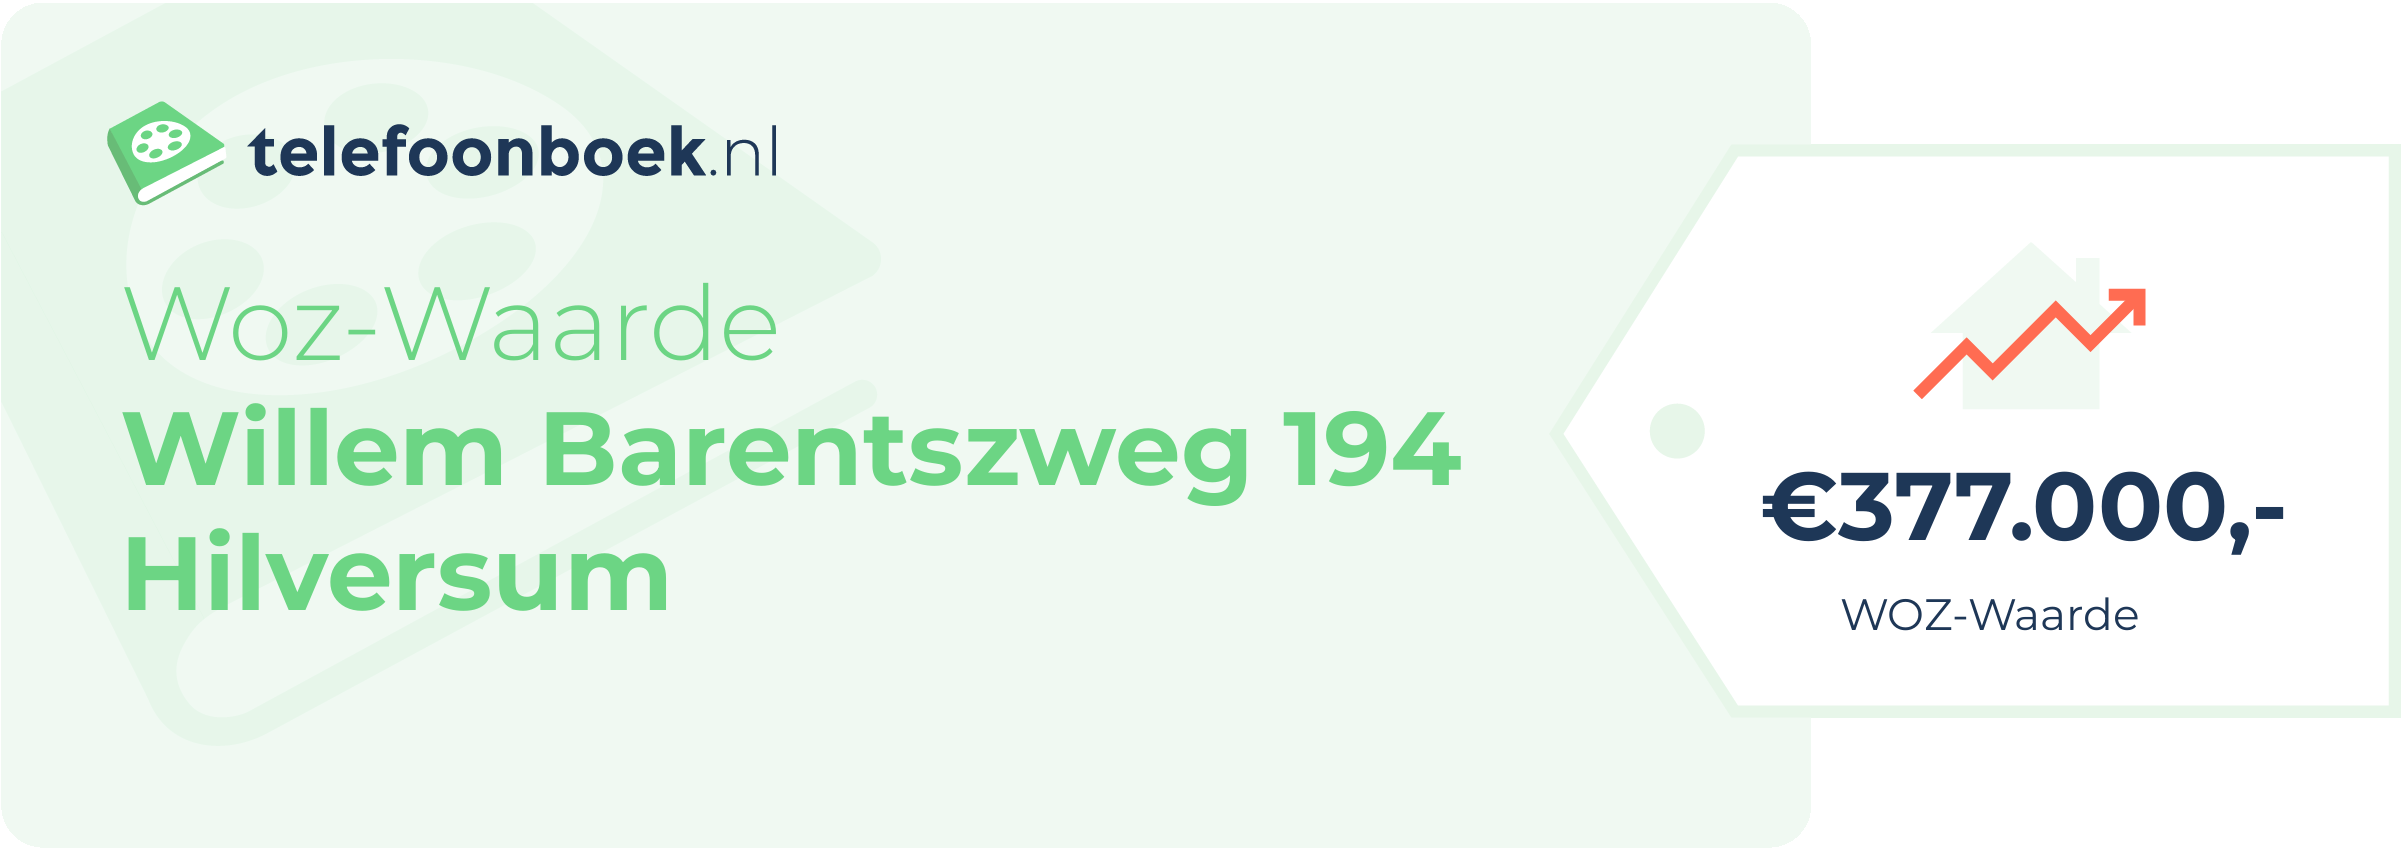 WOZ-waarde Willem Barentszweg 194 Hilversum